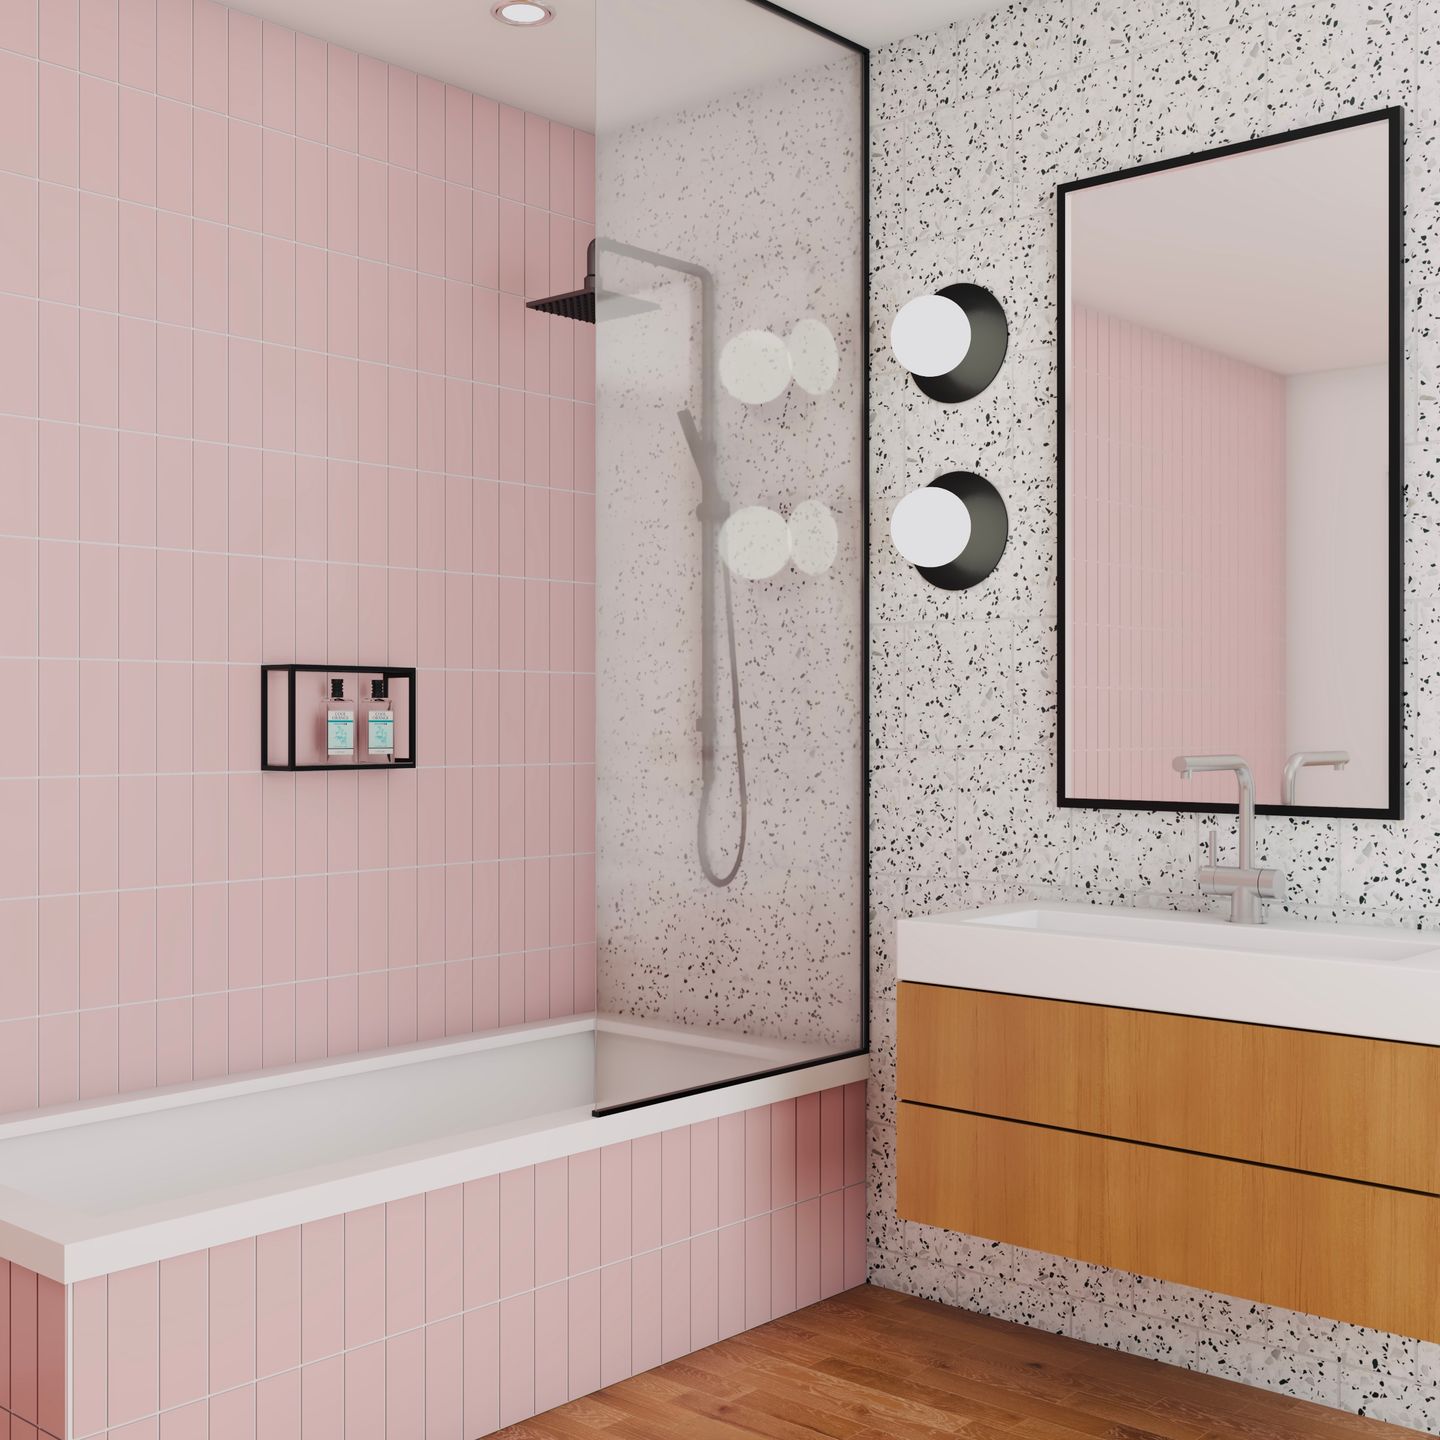 Shabby Chic Bathroom Design - Livspace